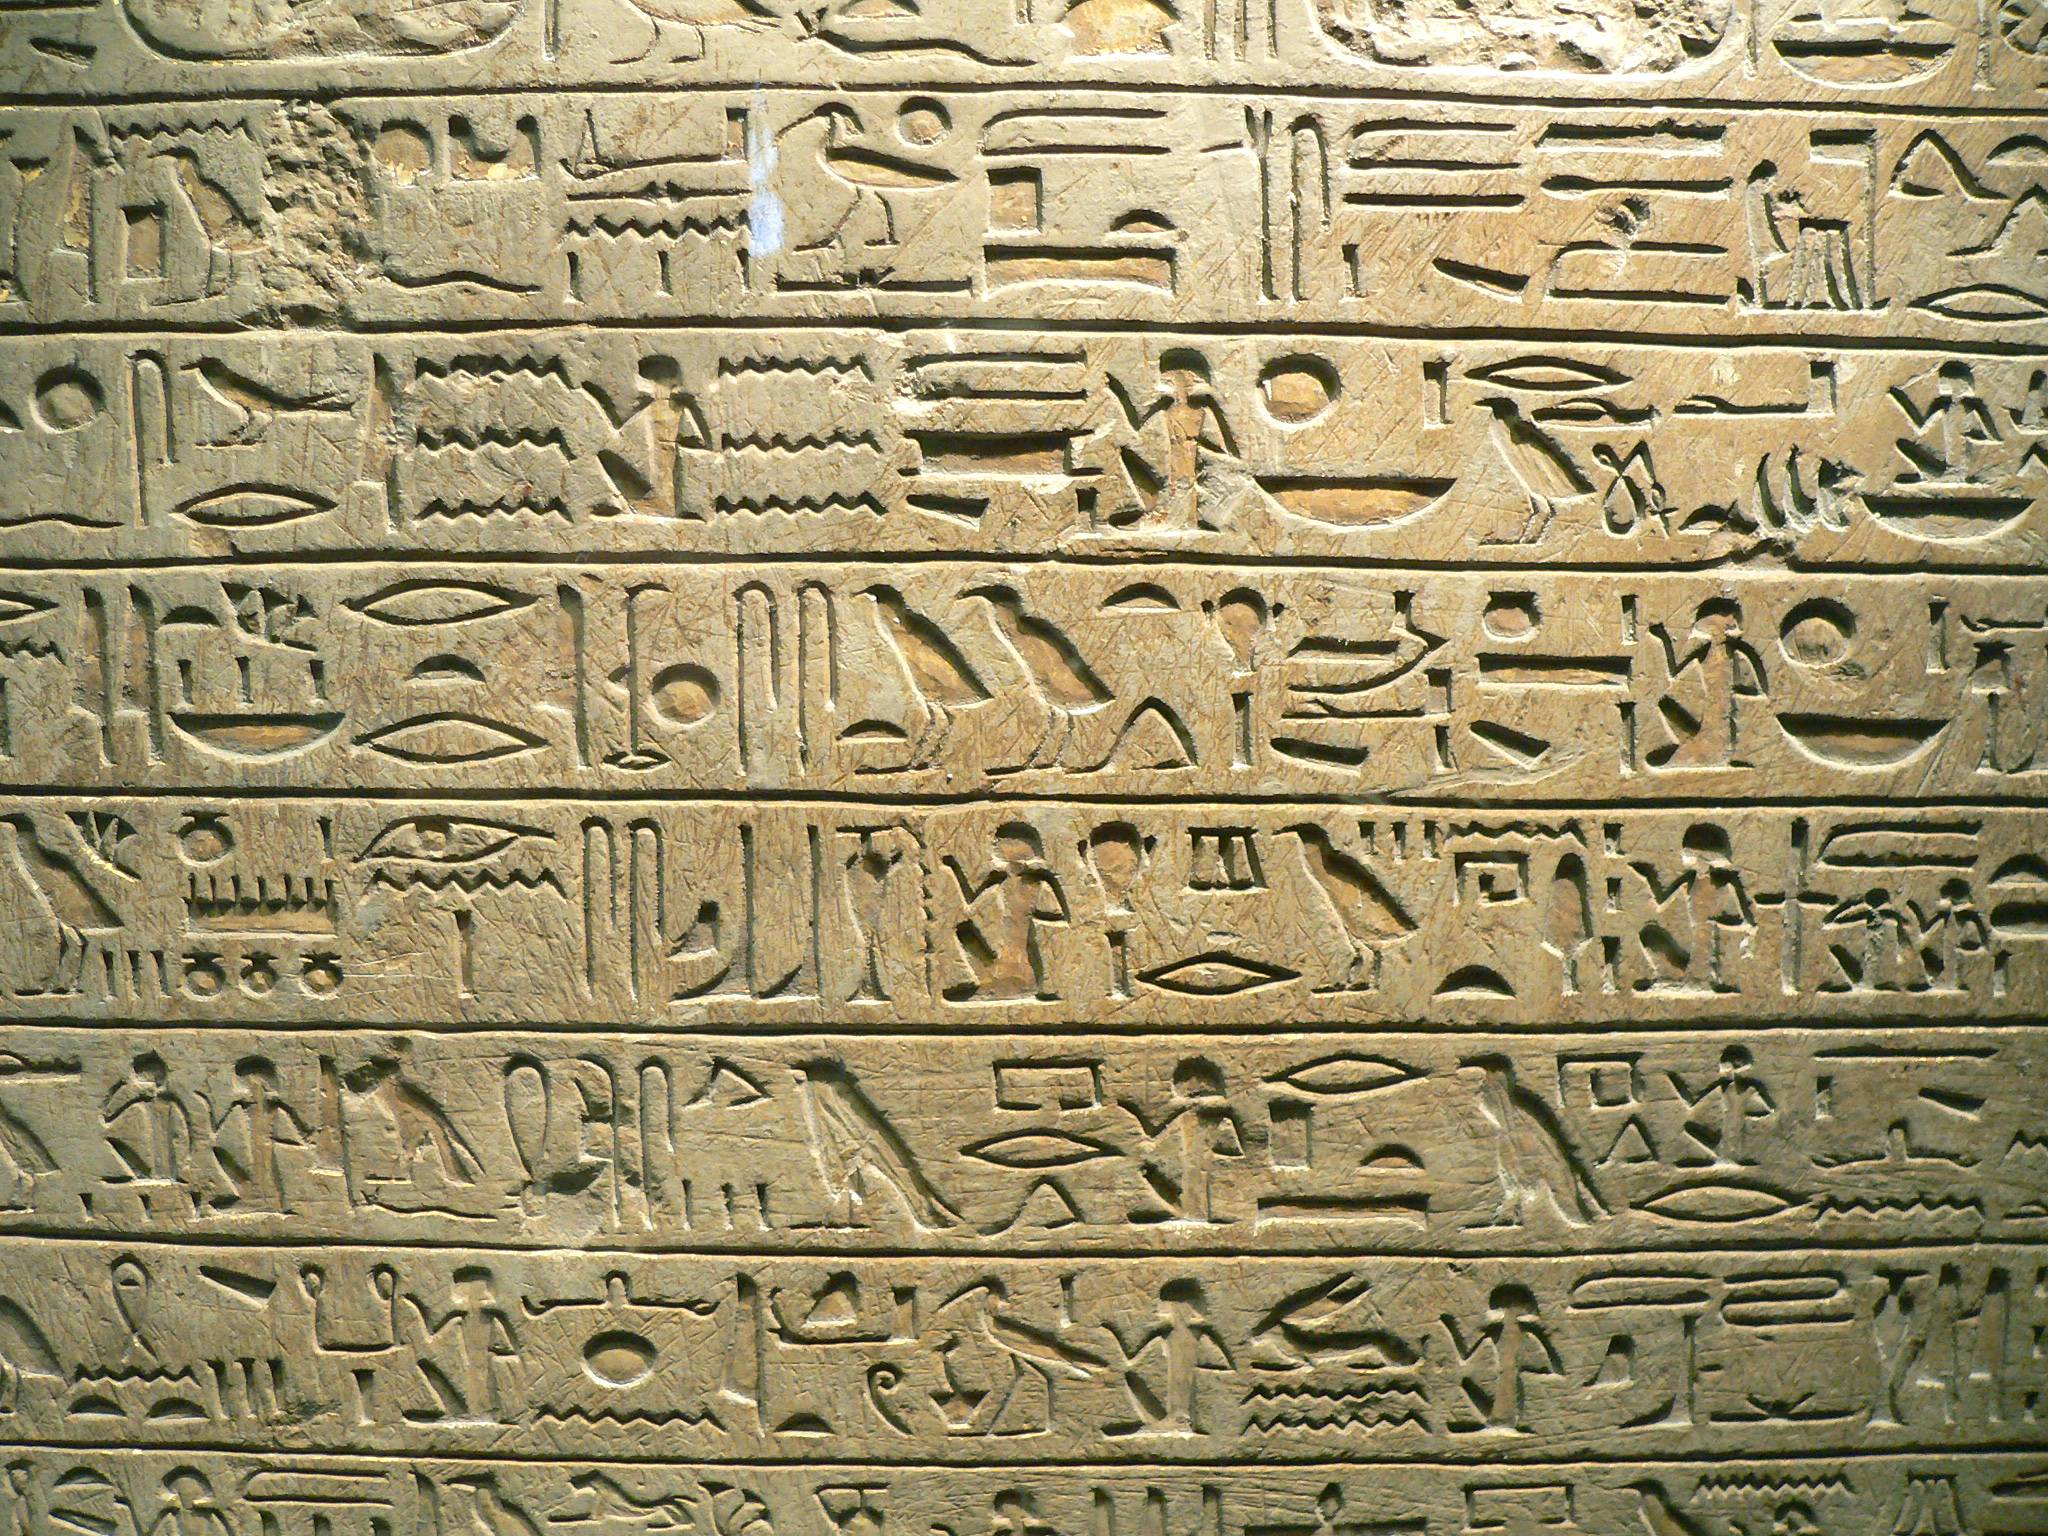 EGIPTOLOGÍA: Ancient Egyptian literature